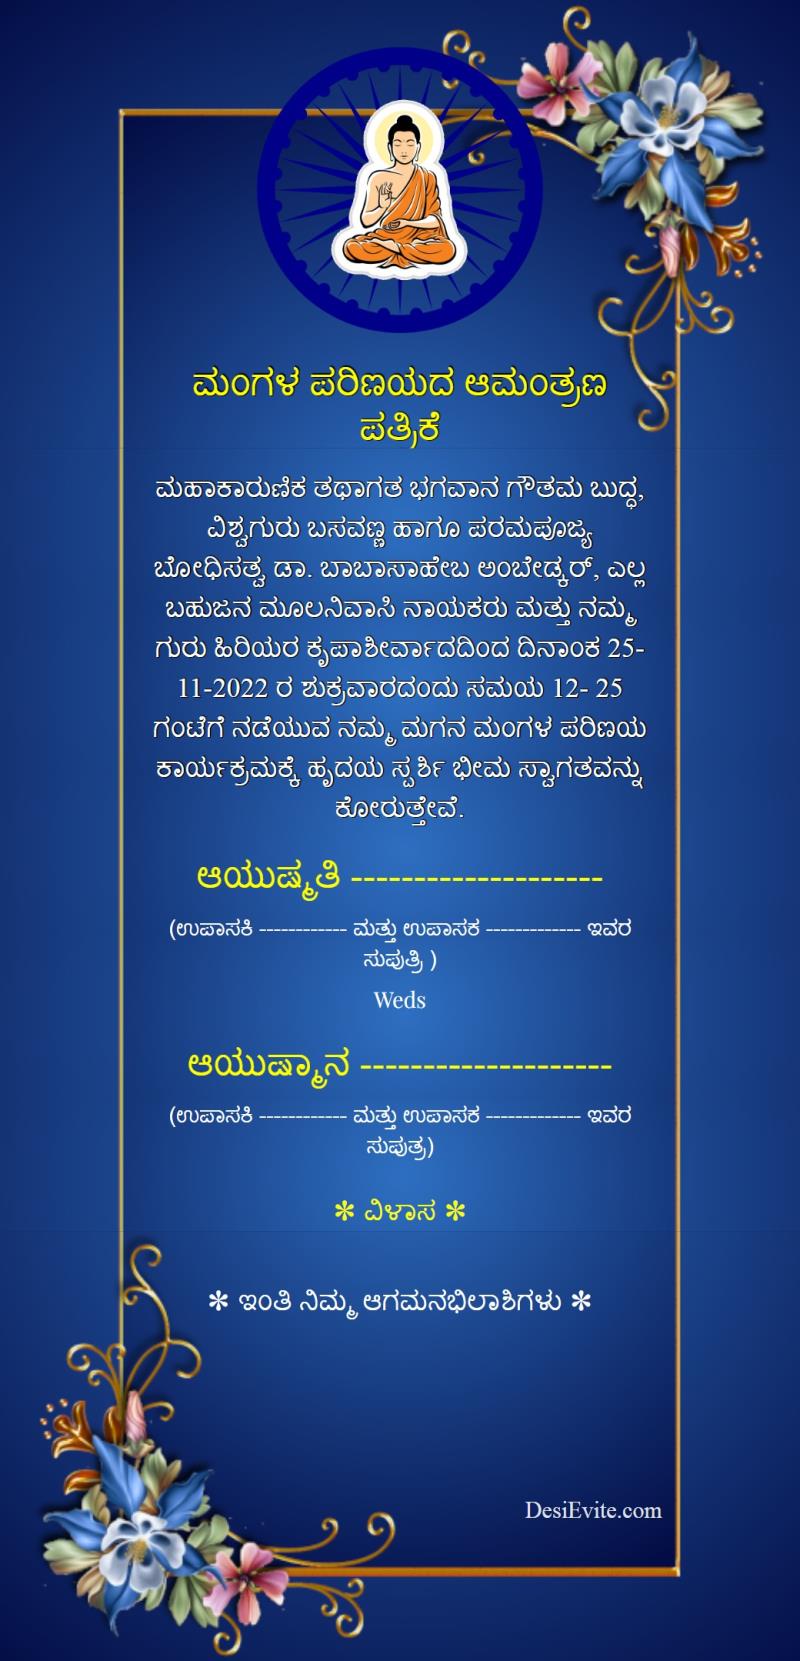 Kannada buddhist wedding invitation card template 107 85